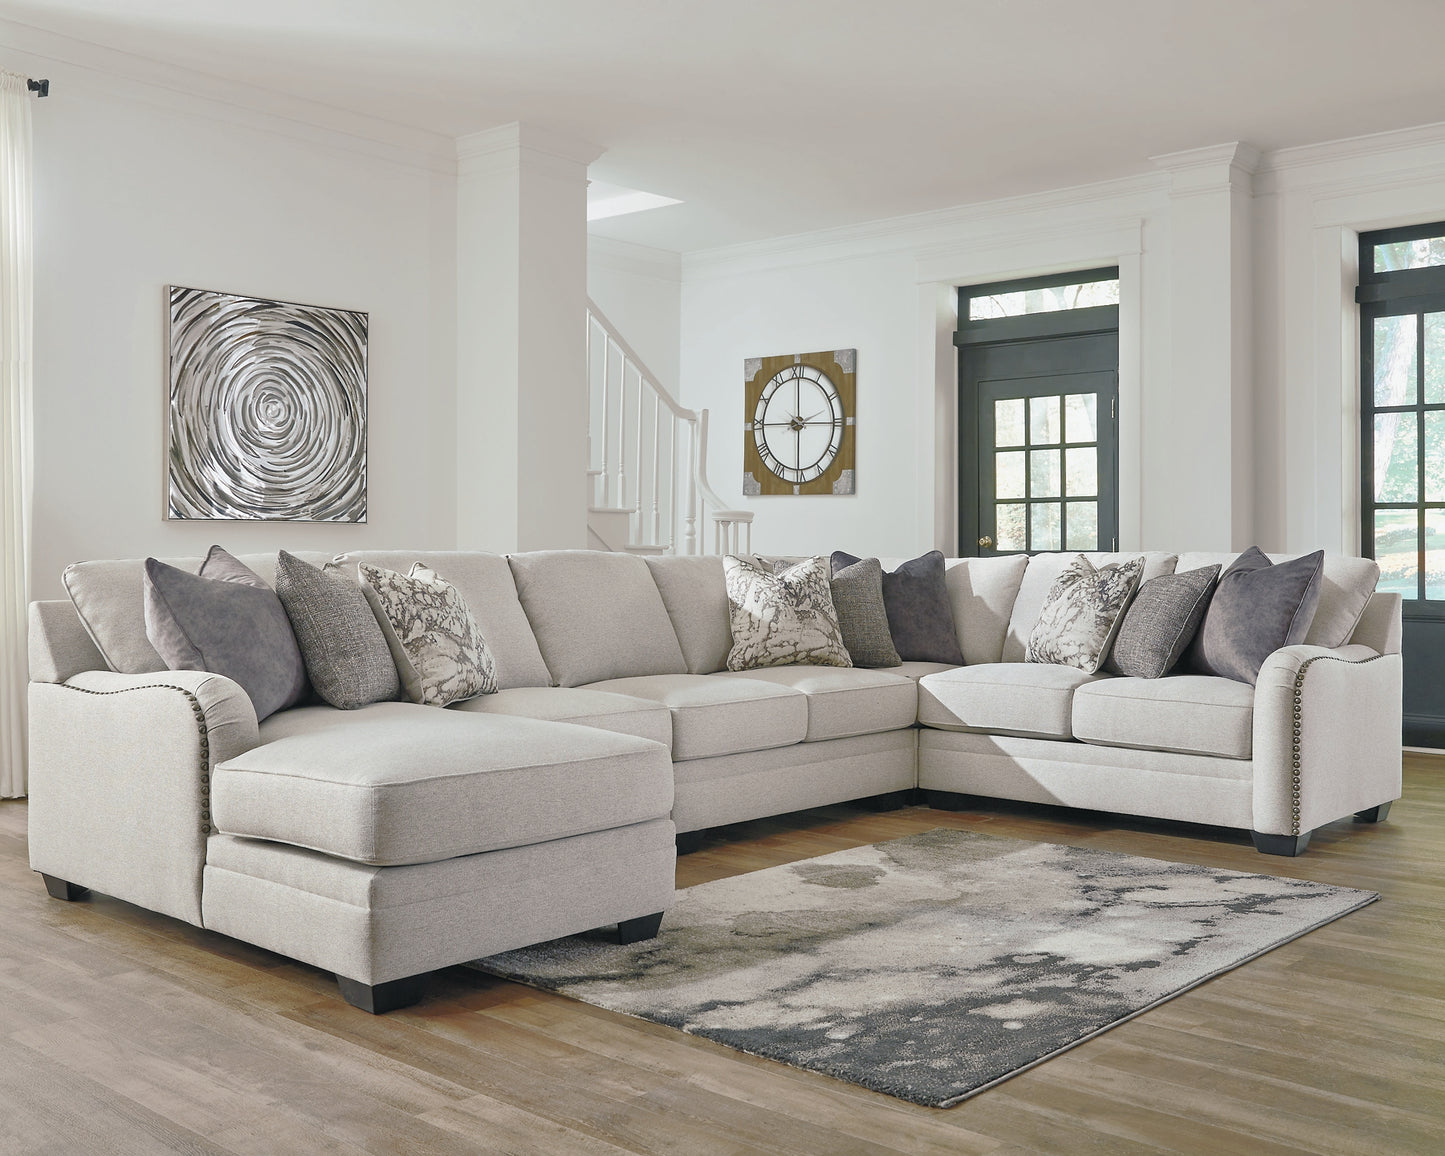 Dellara 5-Piece Sectional with Ottoman JB's Furniture  Home Furniture, Home Decor, Furniture Store